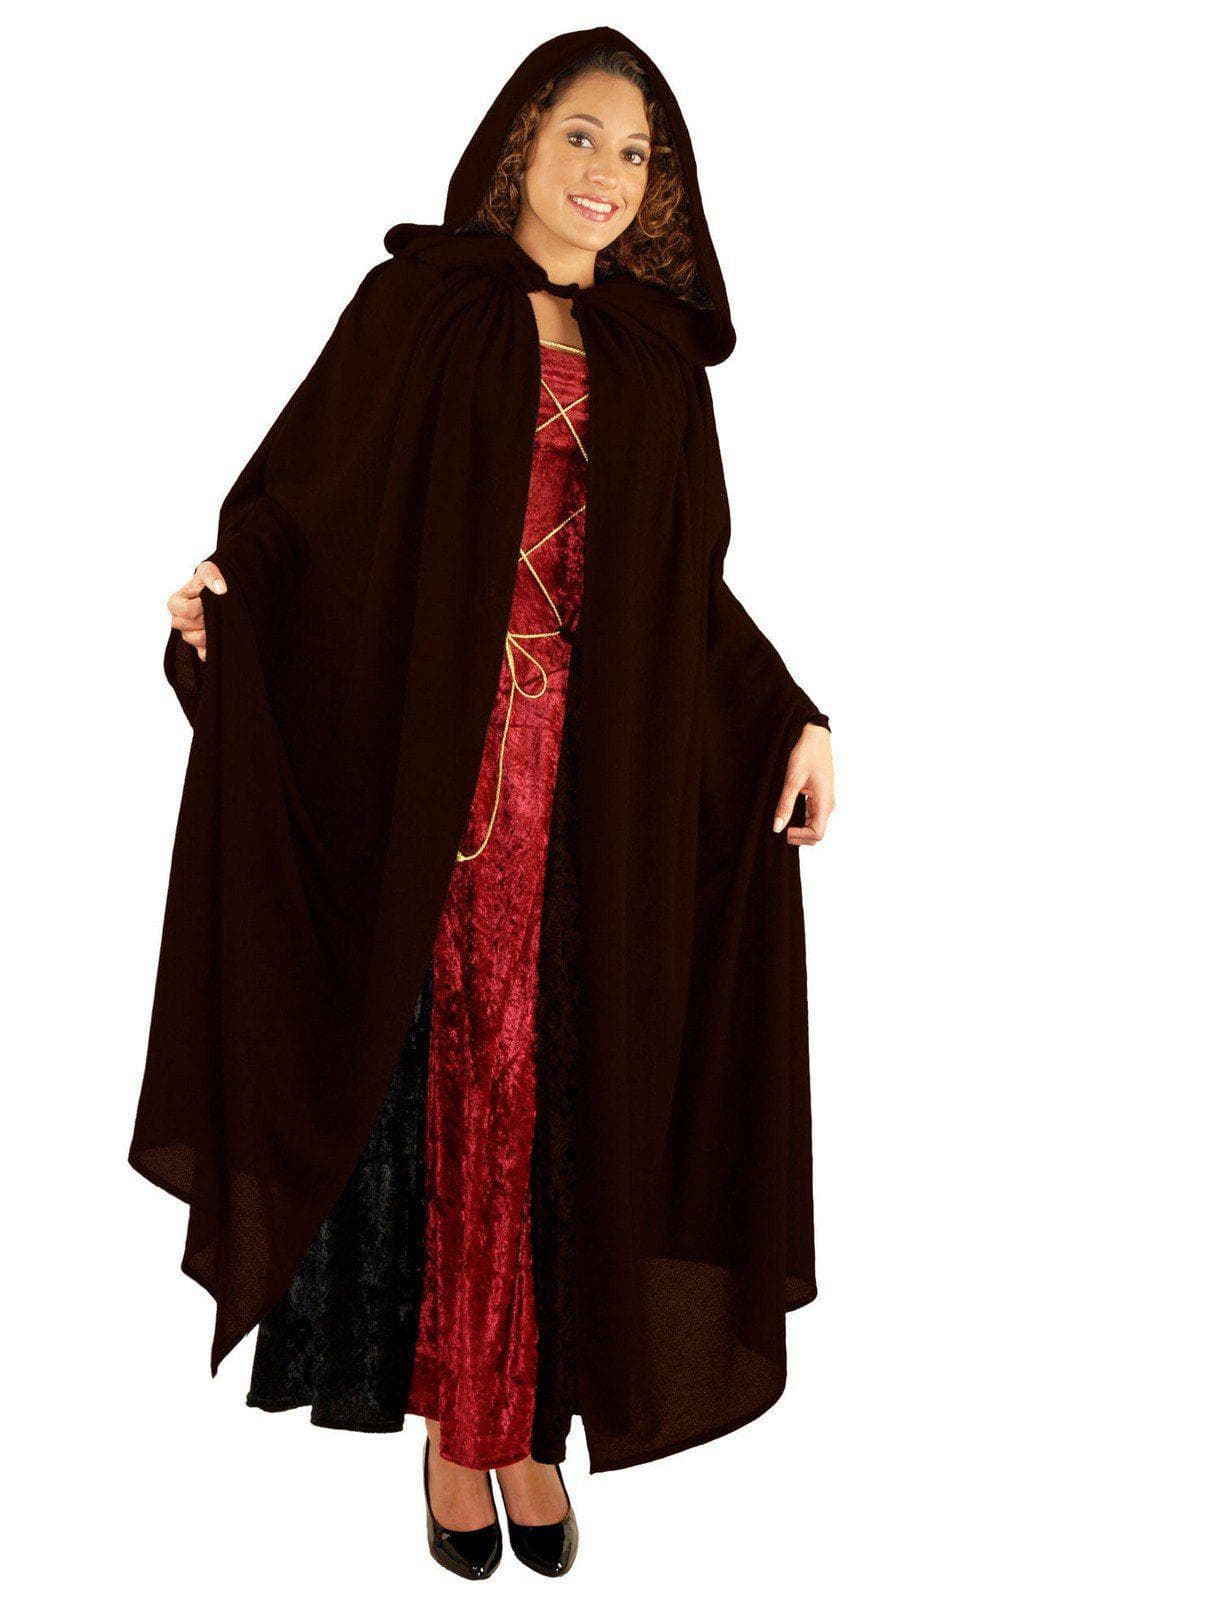 Adult Peasant Cloak Costume - costumes.com